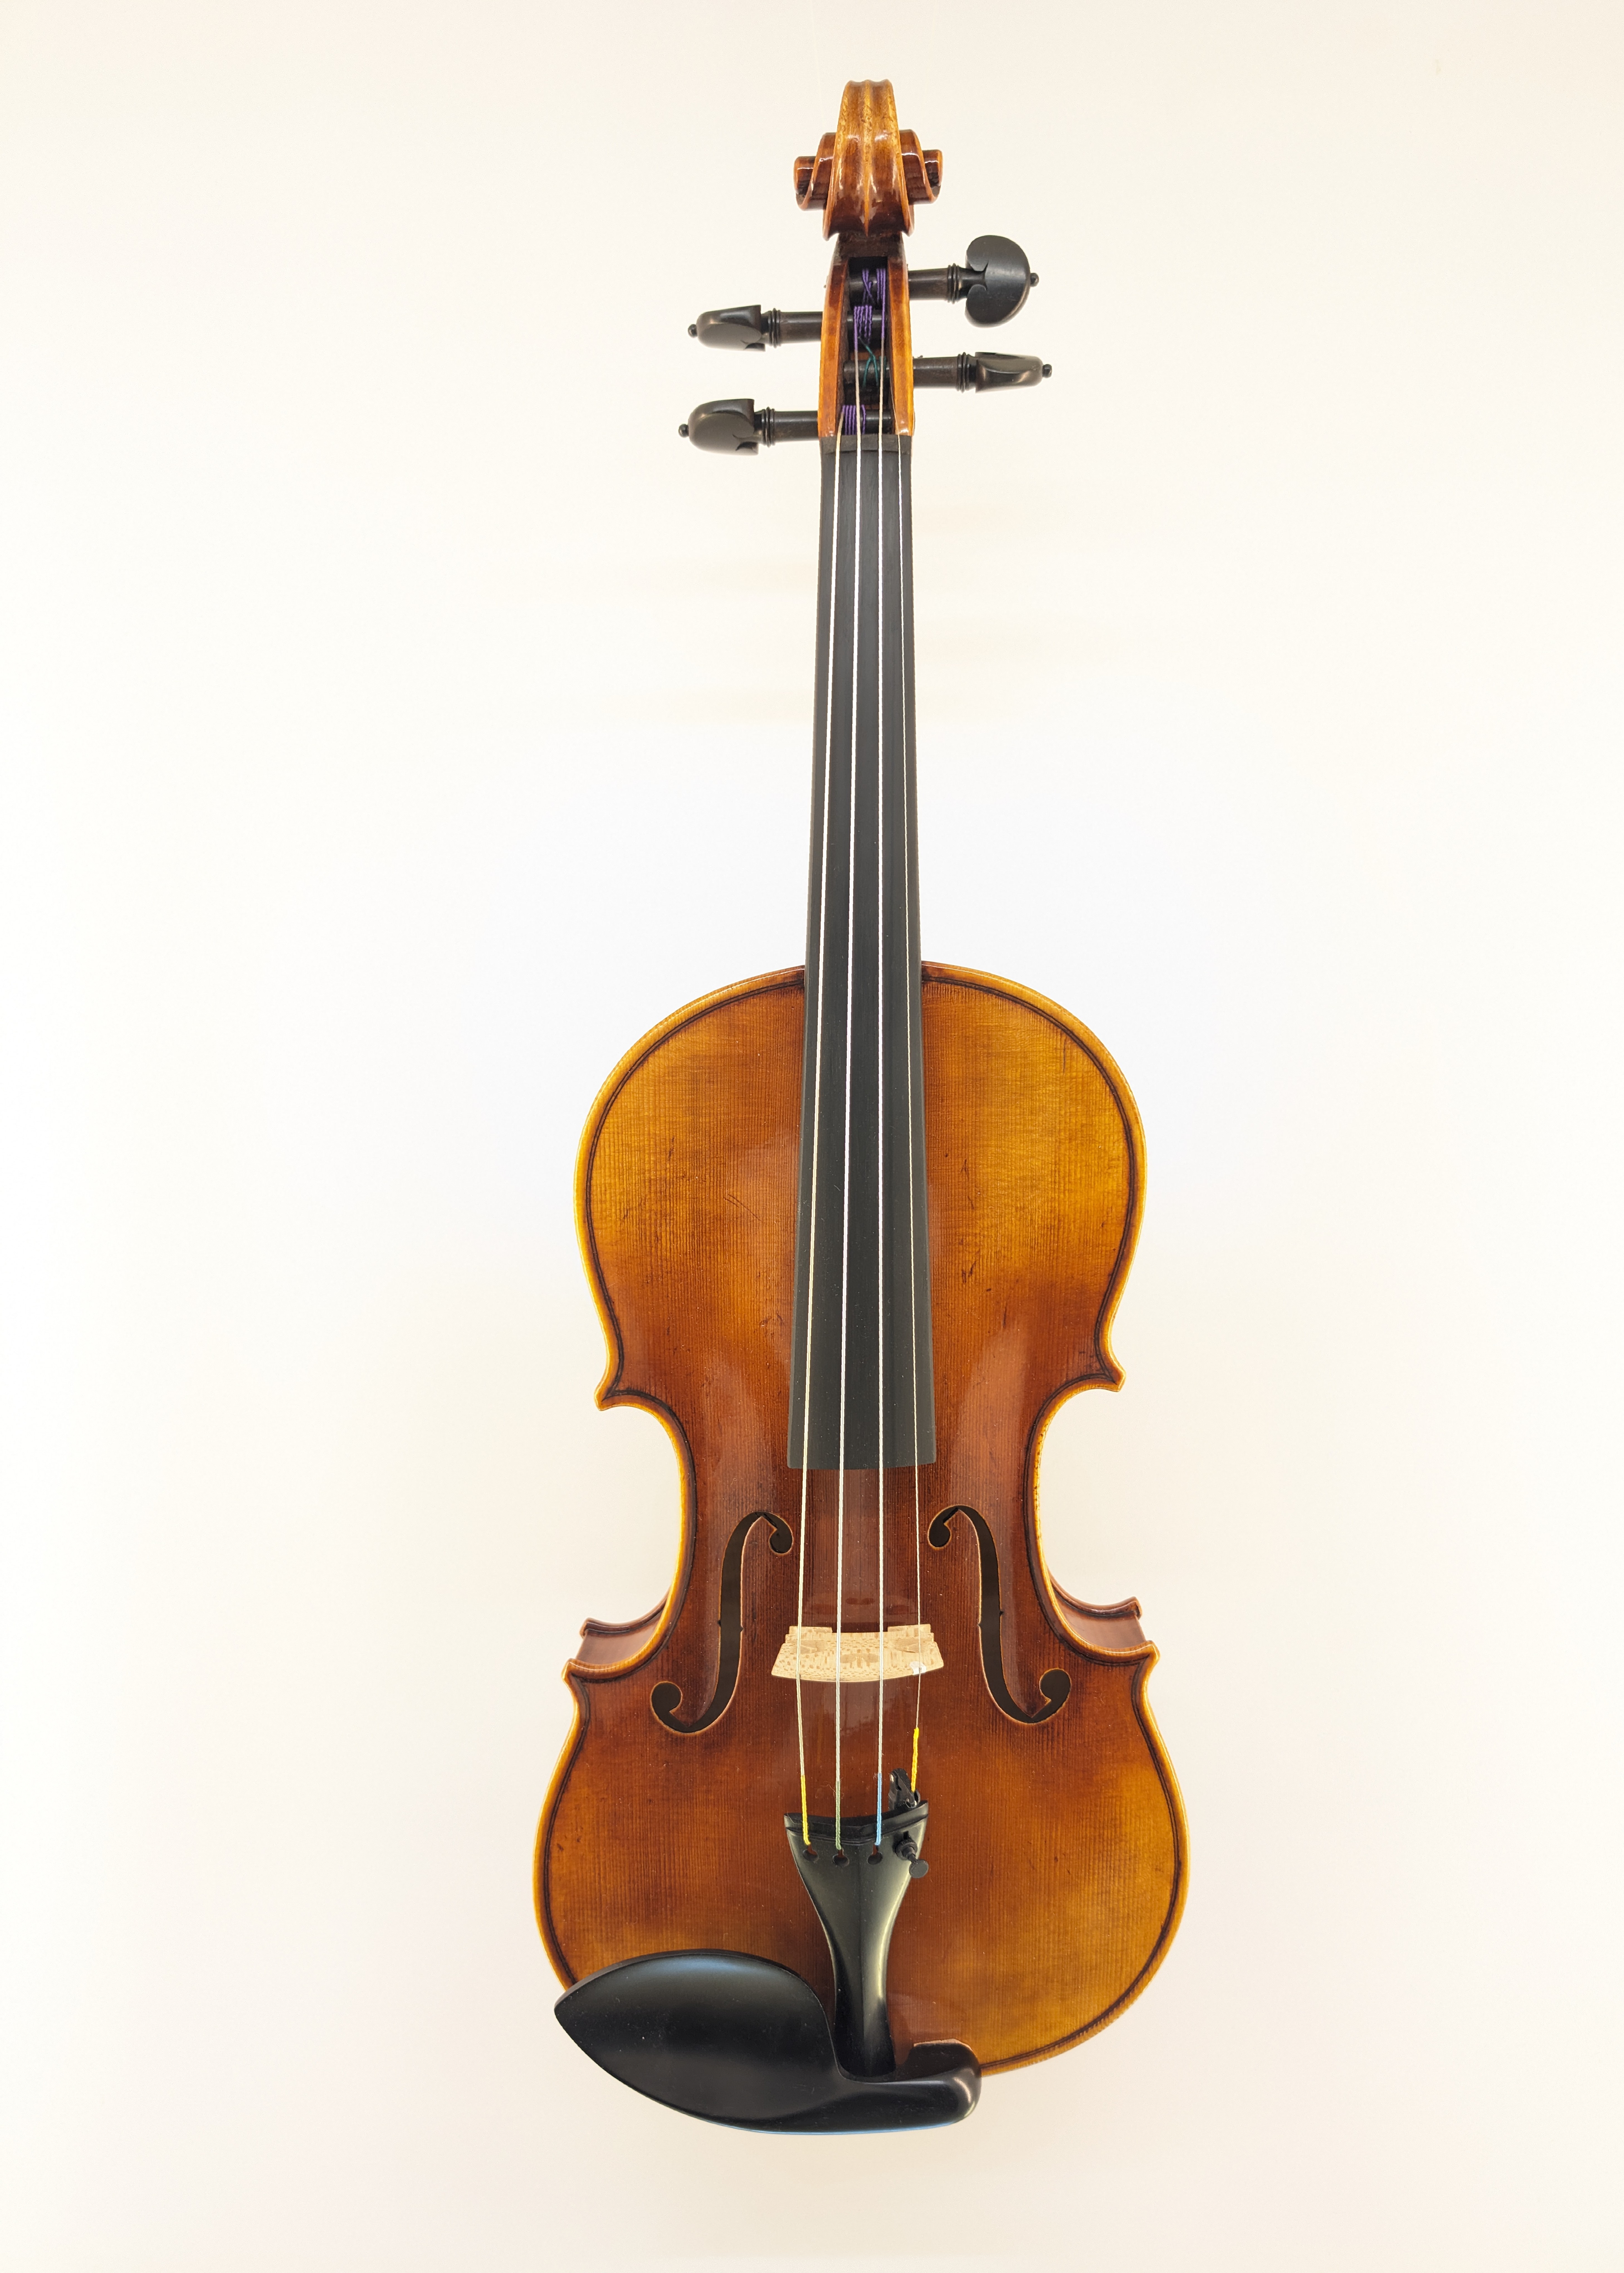 Scott Cao Violins | Master Crafted Instruments